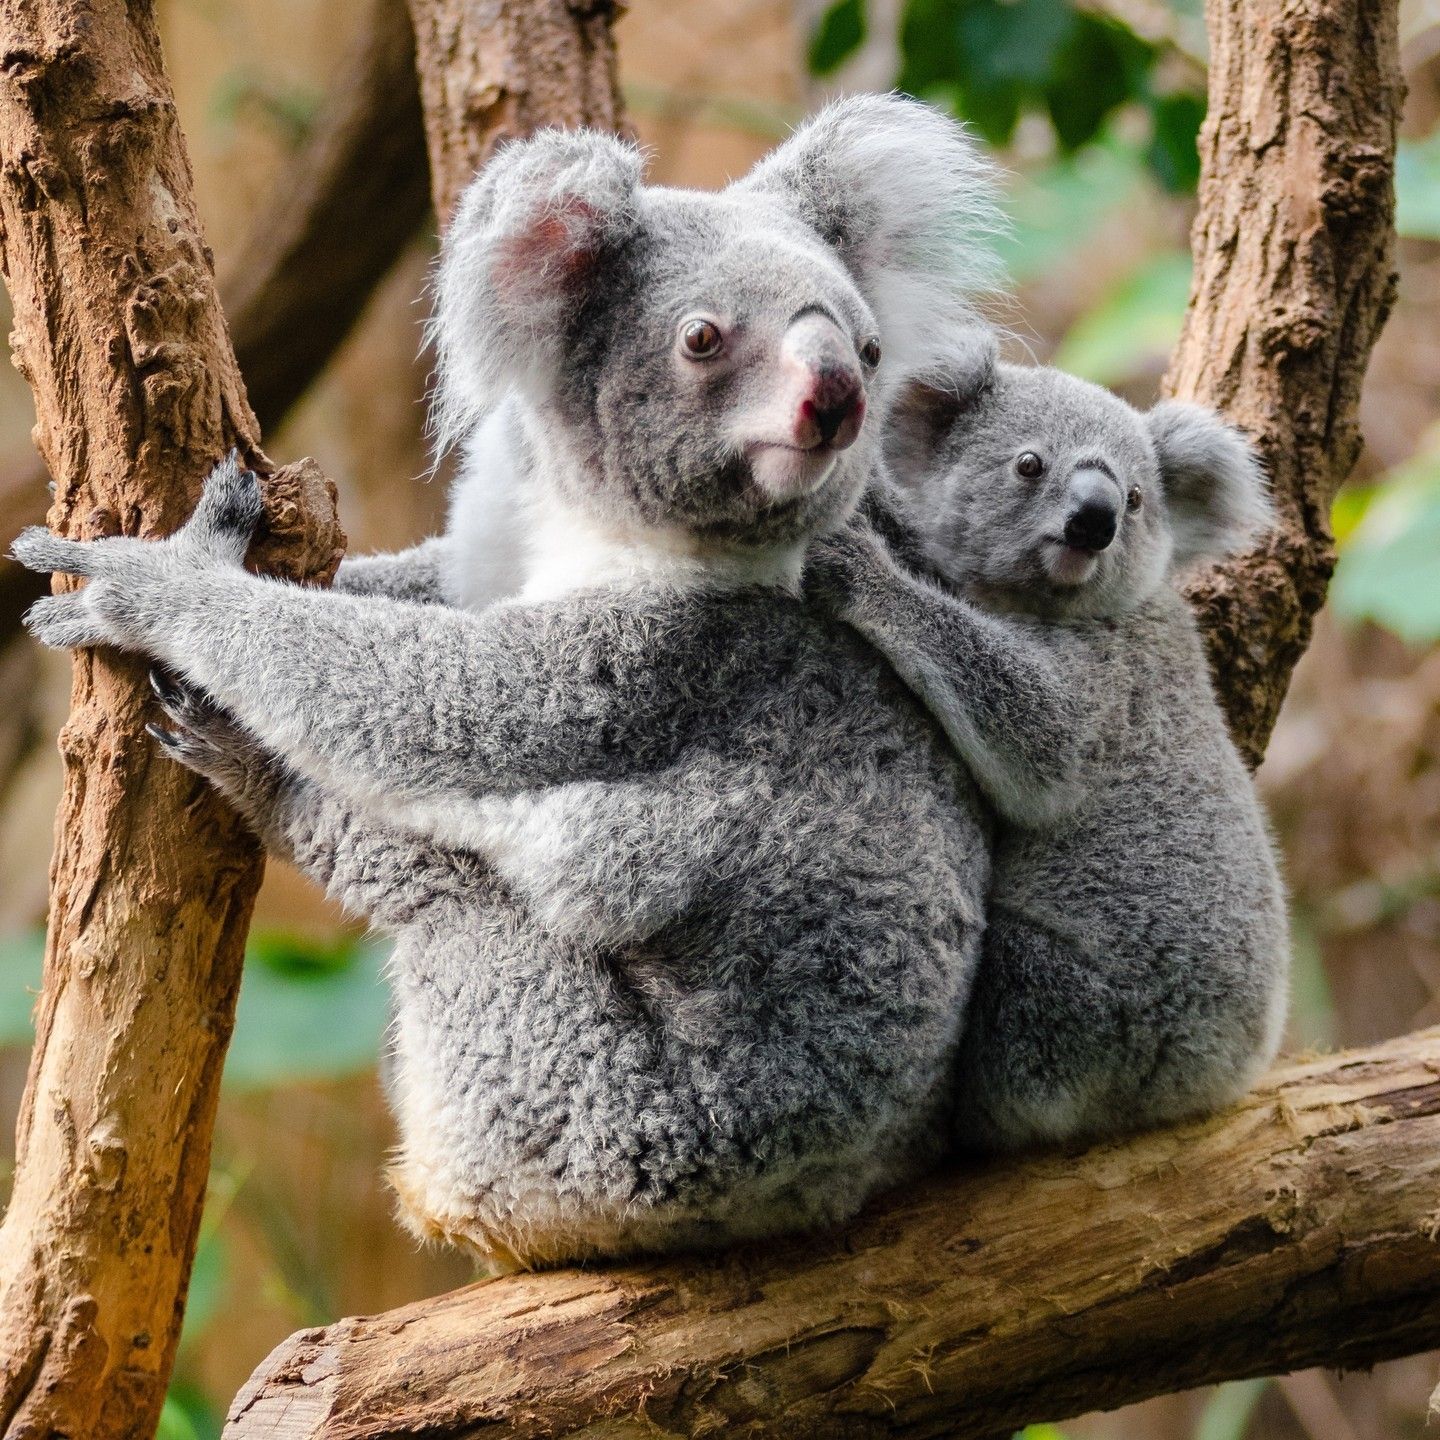 Two Koalas sitting on a brand in a tree.